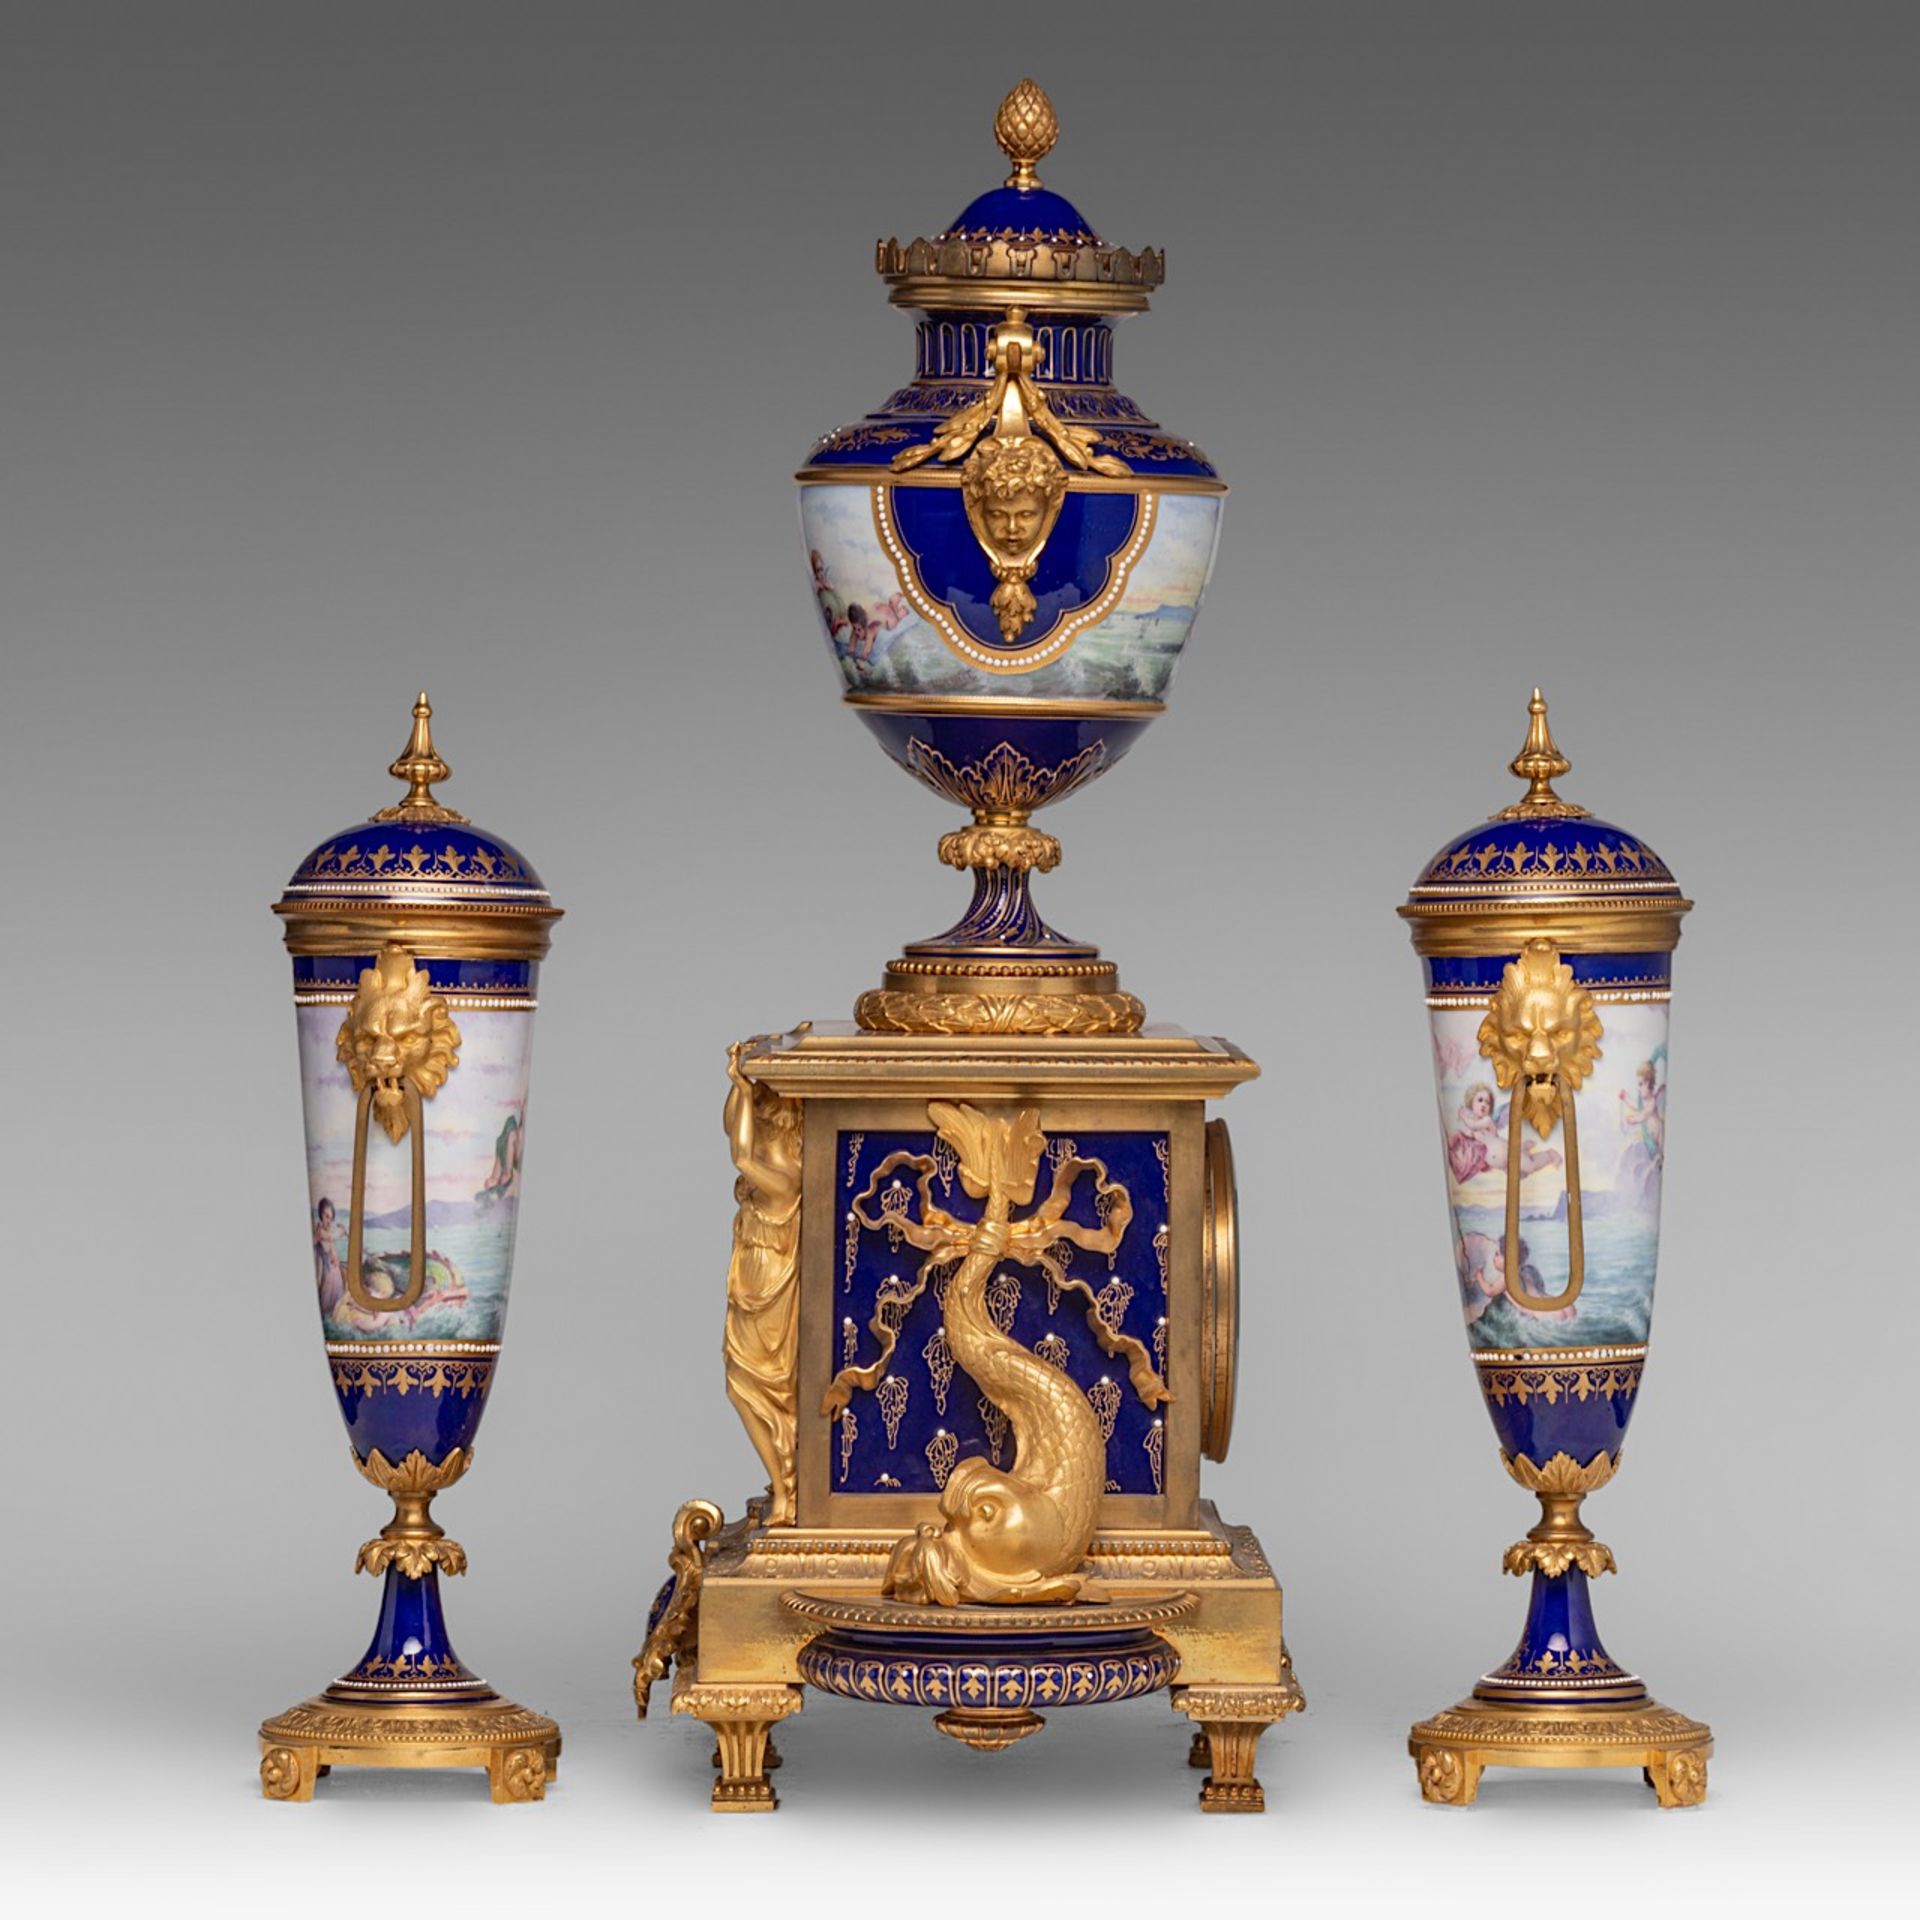 A fine Belle Epoque three-piece gilt bronze and Sevres porcelain mantle clock, H 33,5 - 52 cm - Image 2 of 7